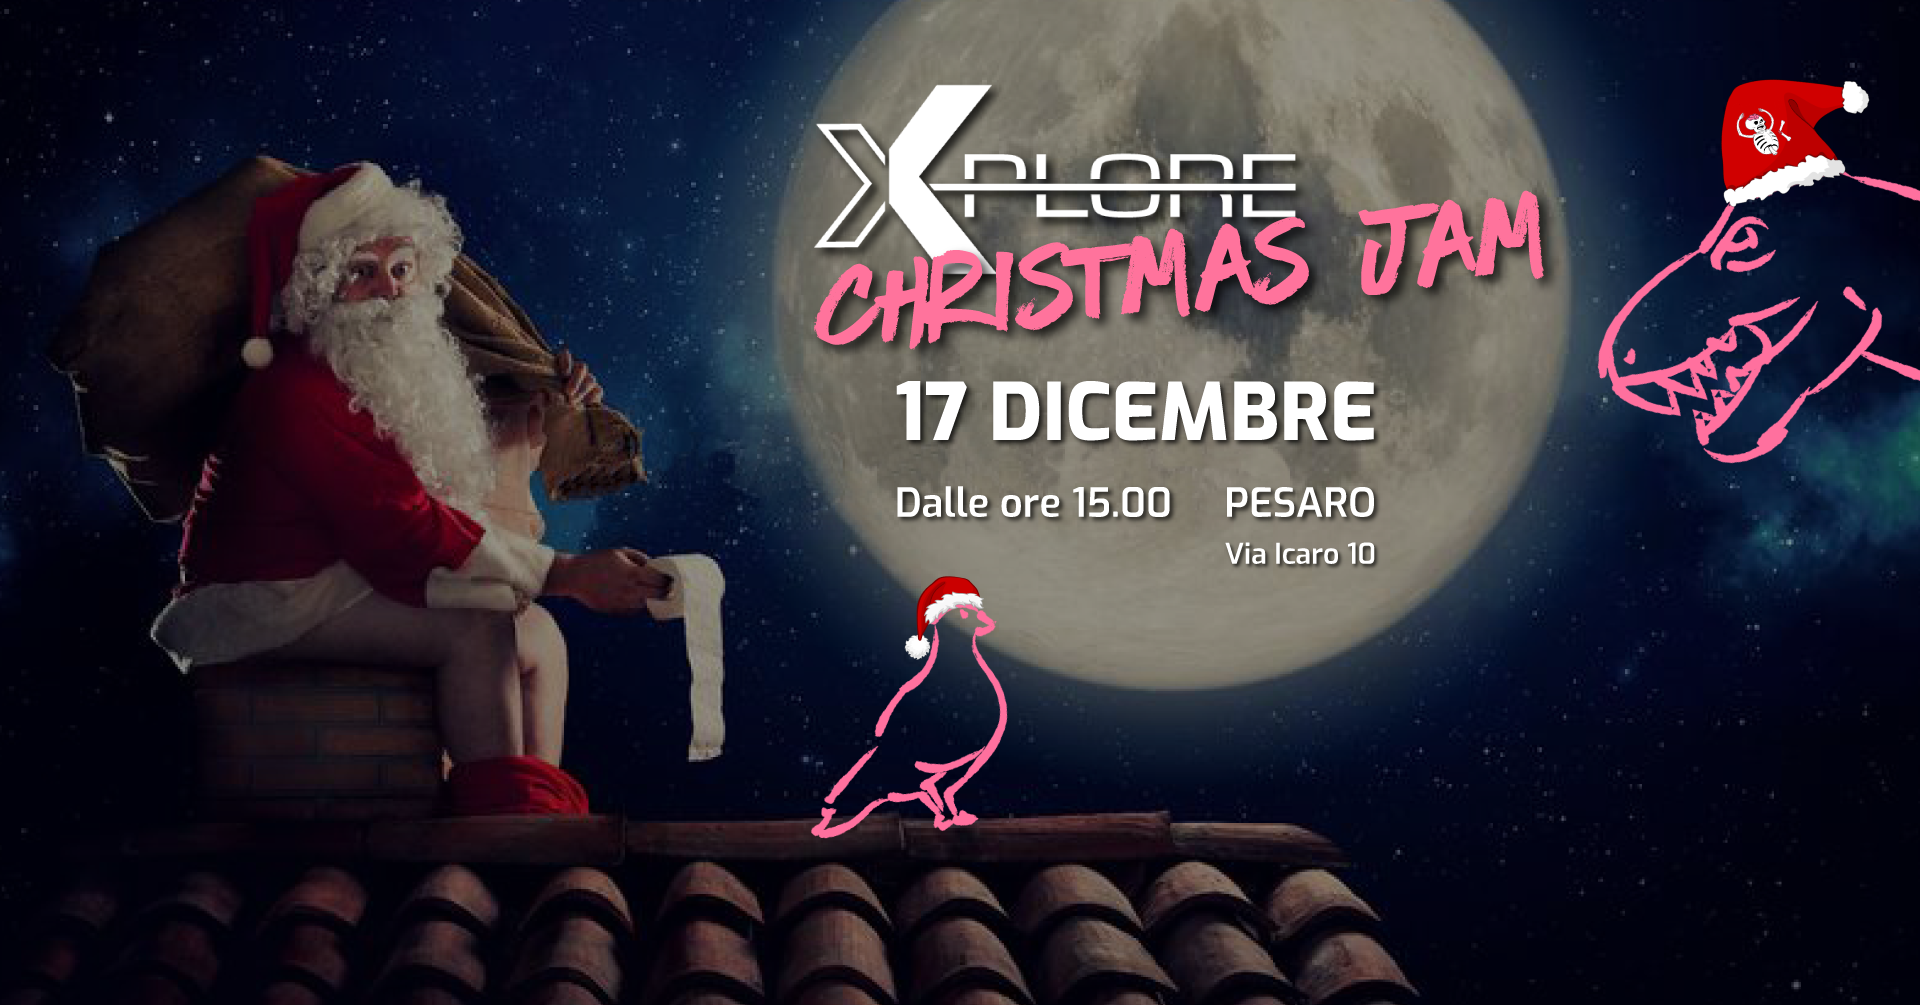 Xplore Christmas Jam 17 dicembre dalle 15 alle 19